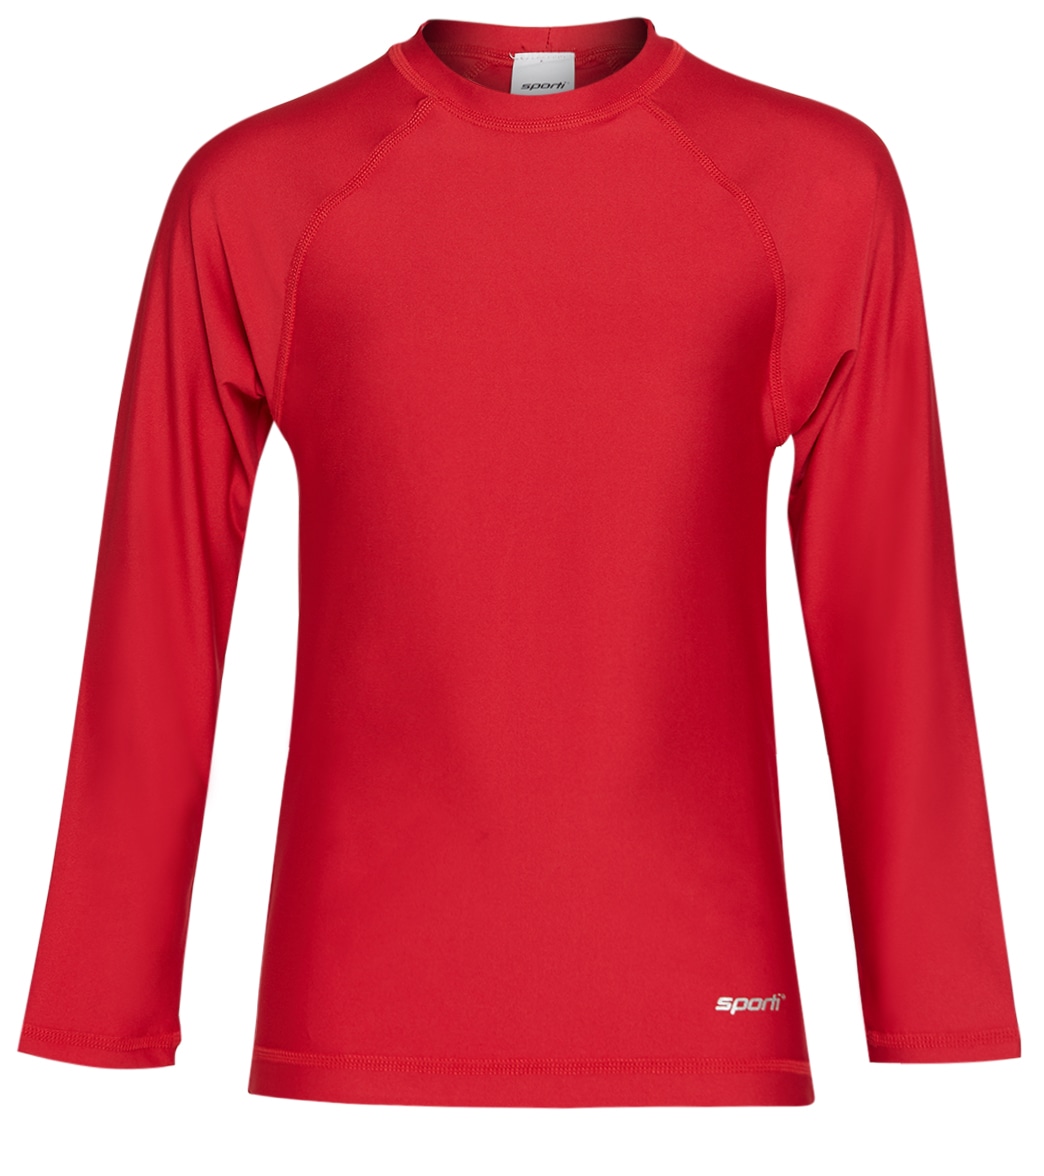 Sporti Youth Men's Long Sleeve Shirt Upf 50+ Comfort Fit Rashguard - Red 10 - Swimoutlet.com